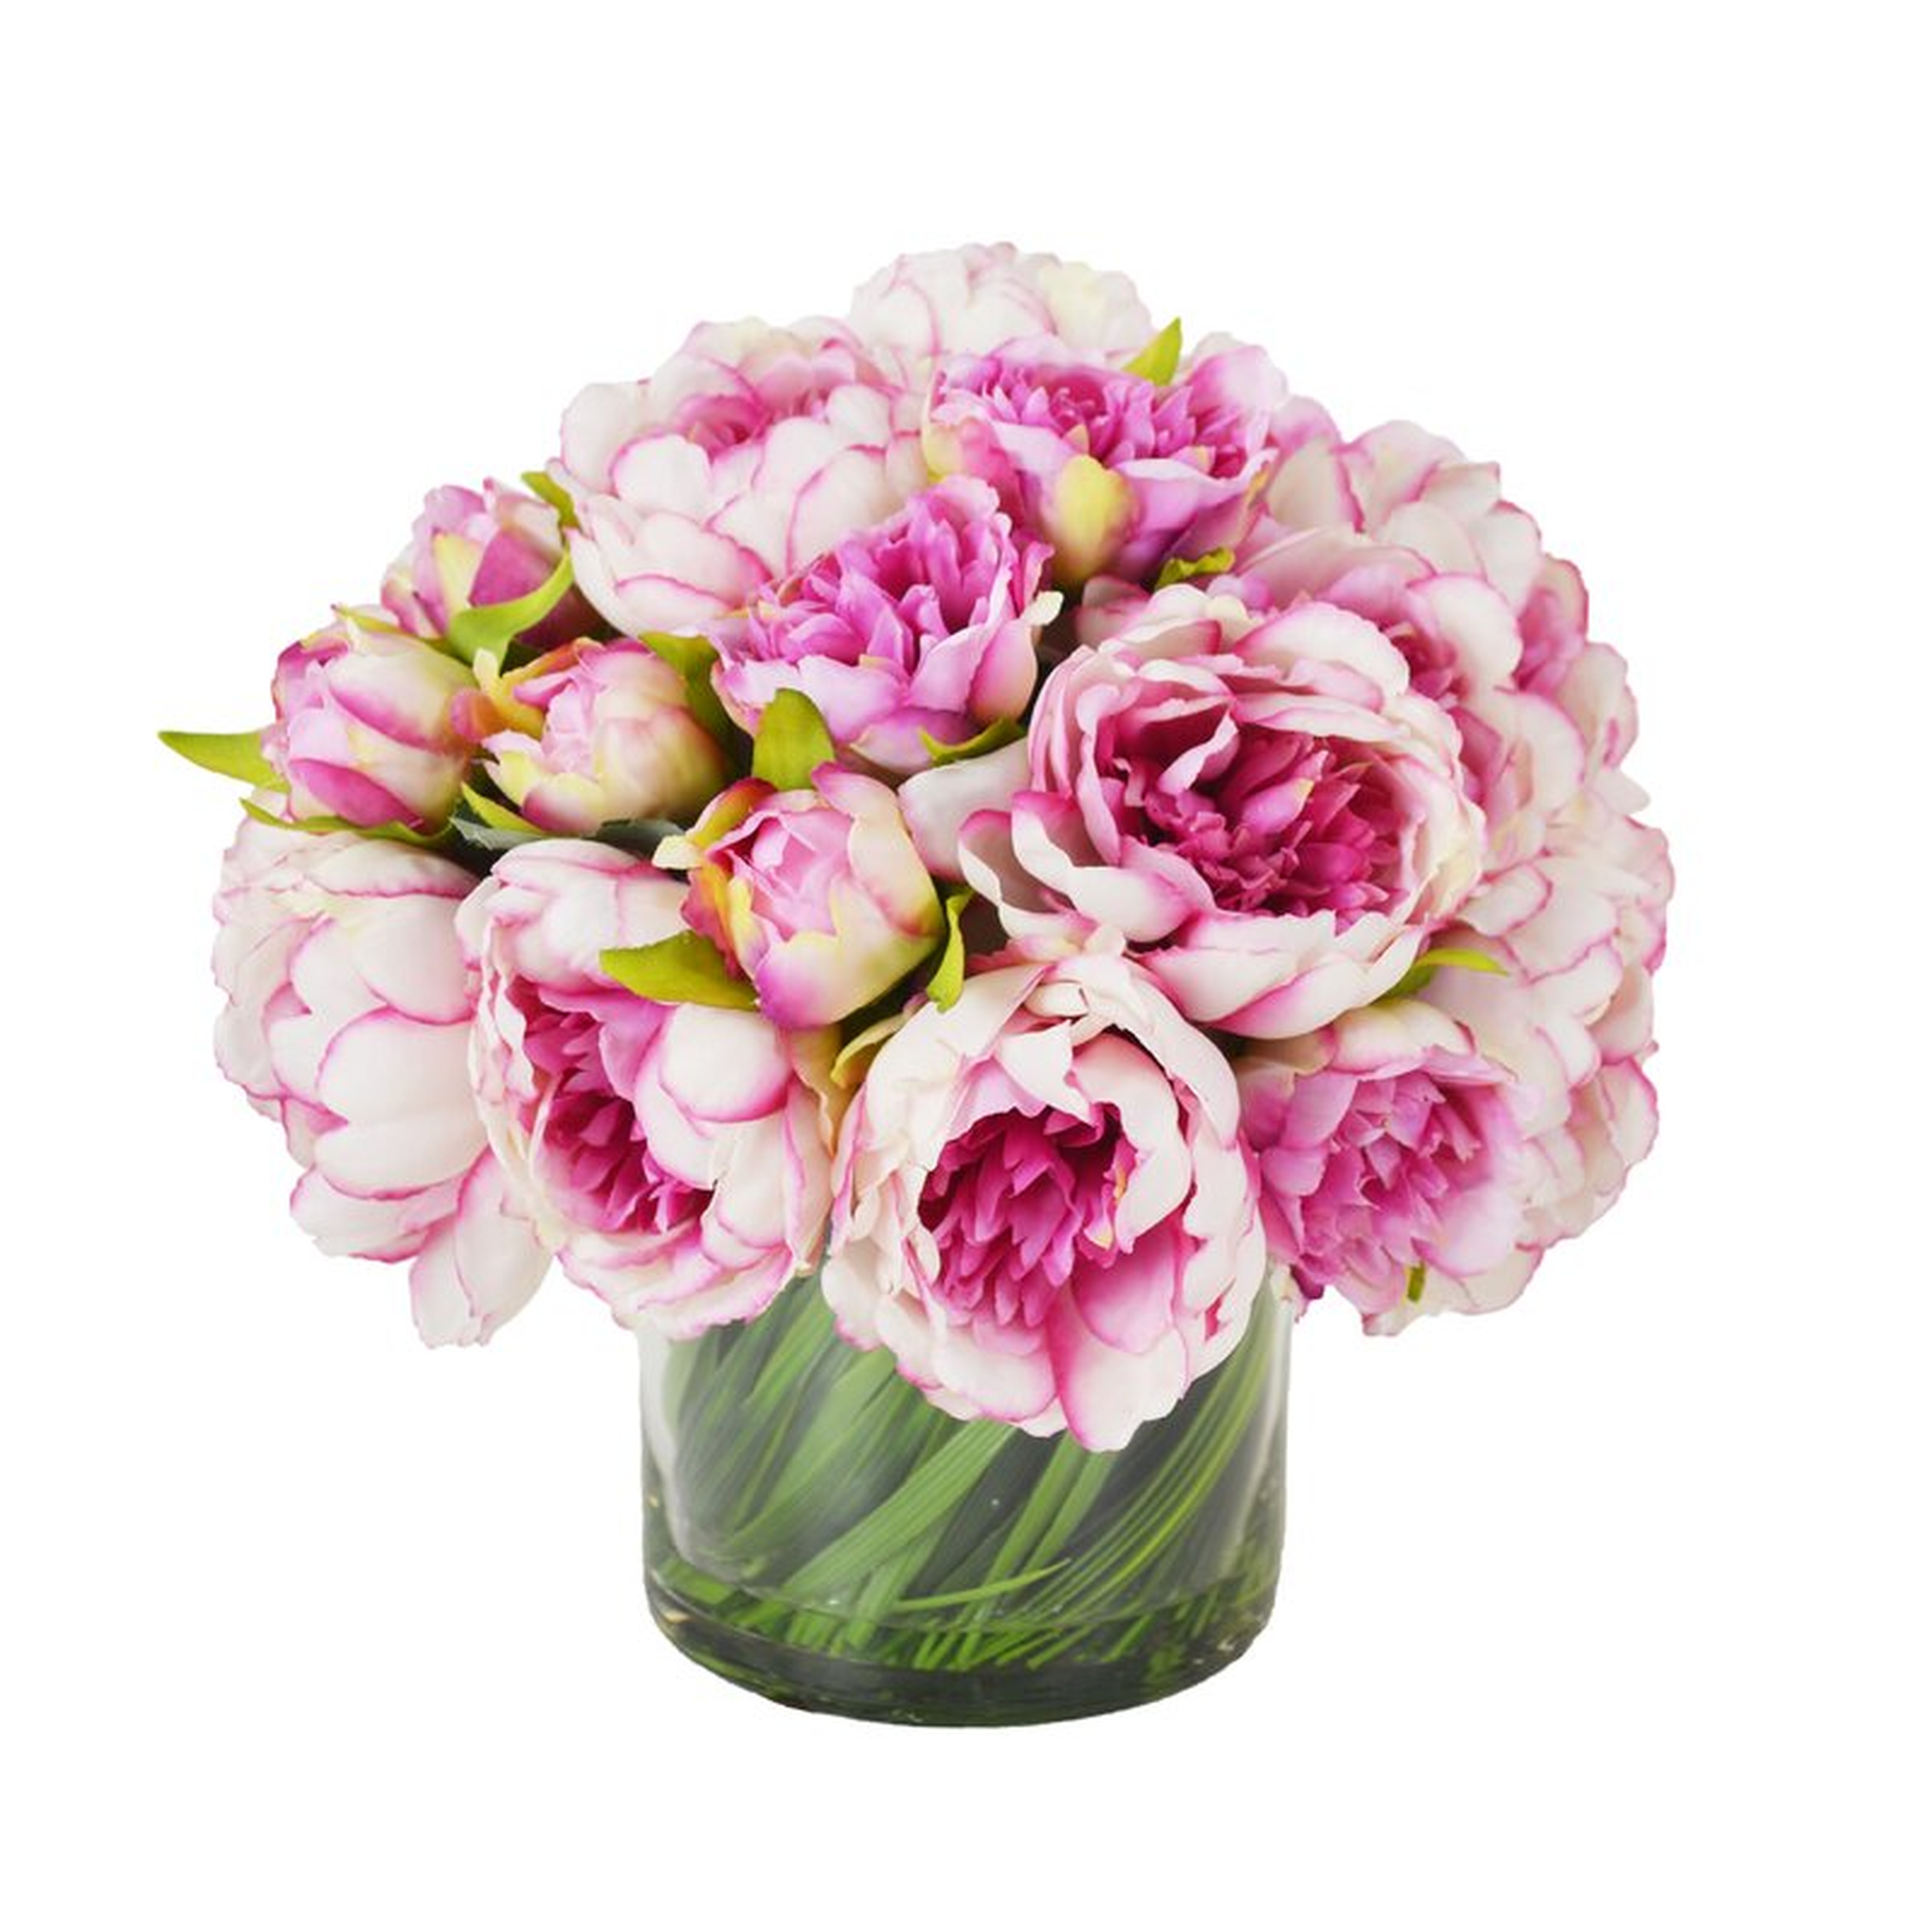 Faux Peonies Floral Arrangement in Glass Vase - Perigold